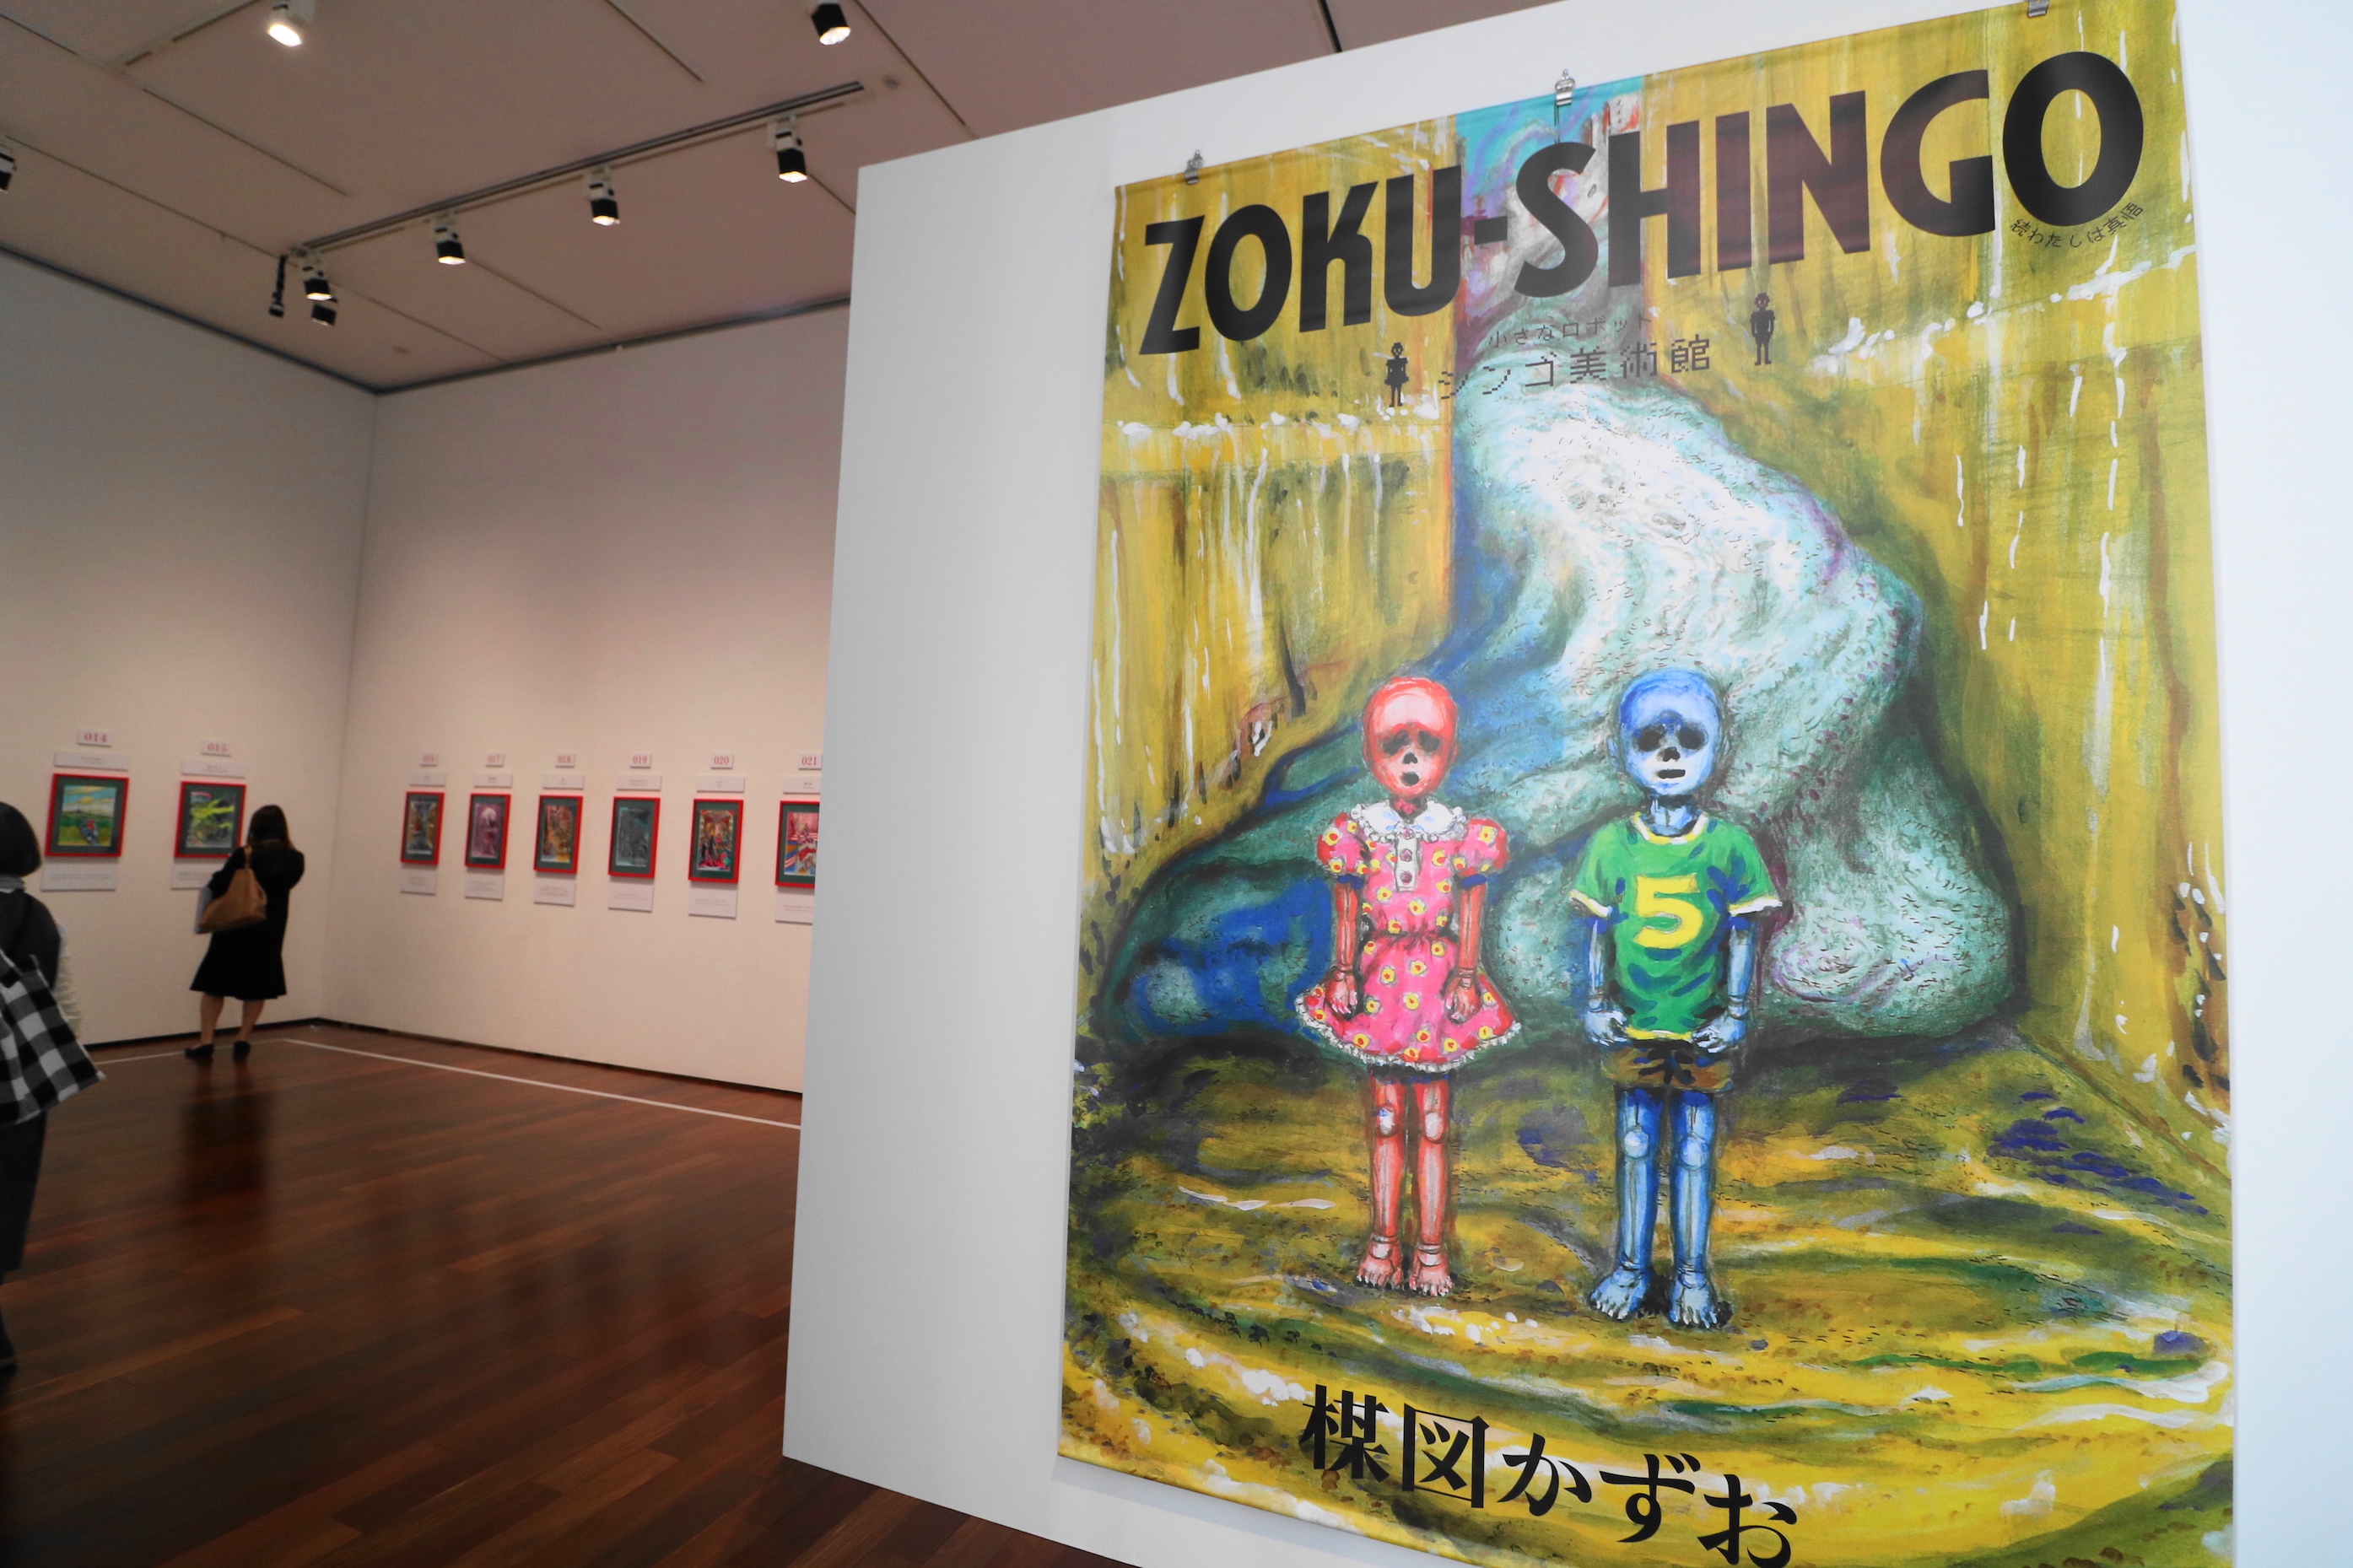 『ZOKU-SHINGO 小さなロボット シンゴ美術館』